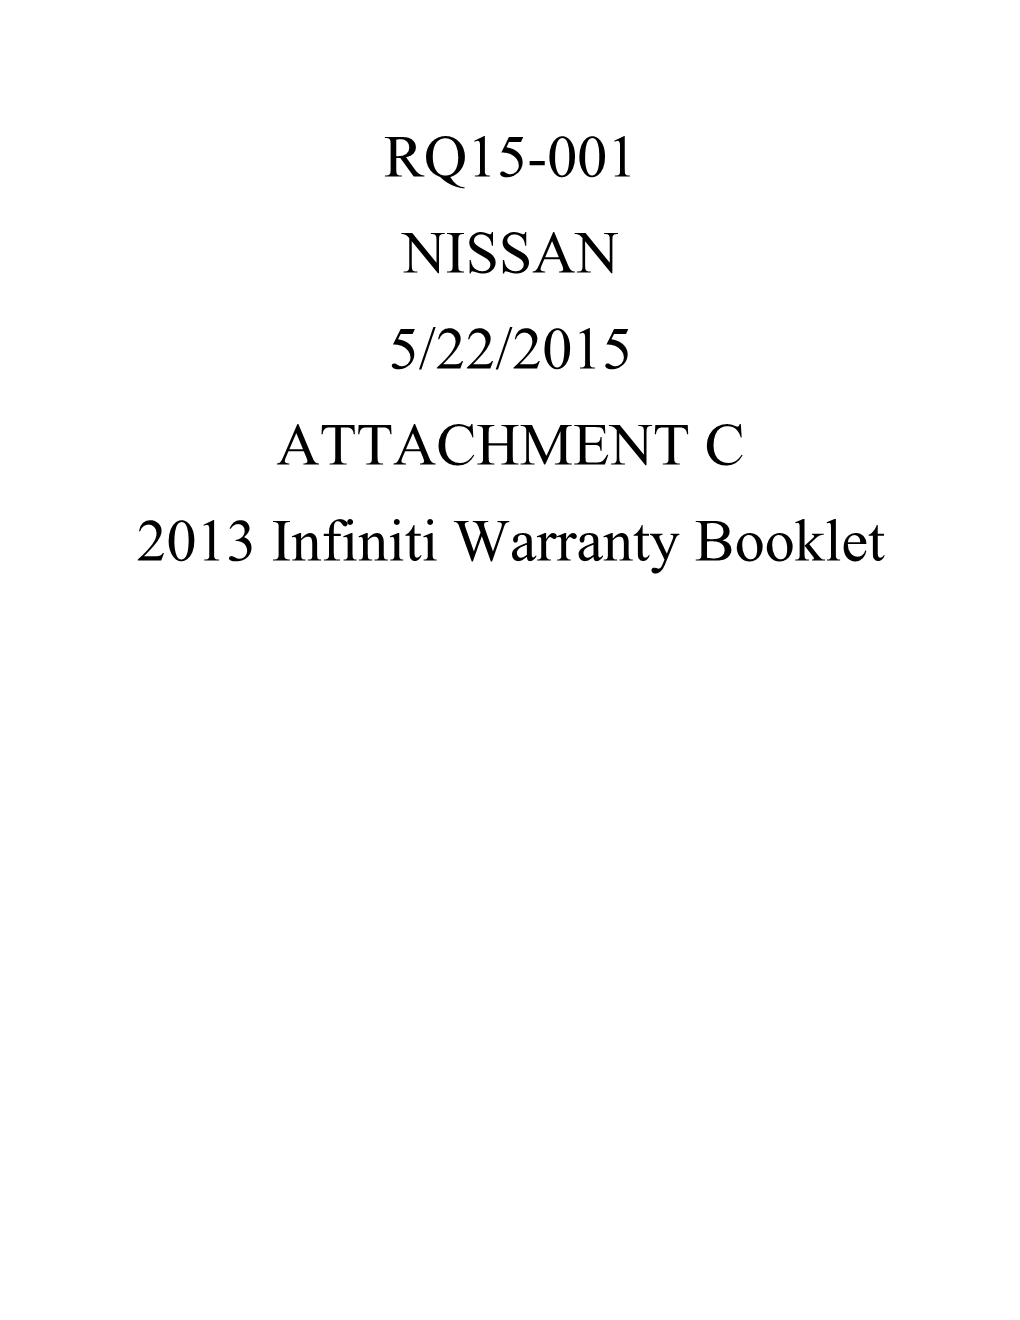 RQ15-001 NISSAN 5/22/2015 ATTACHMENT C 2013 Infiniti Warranty Booklet